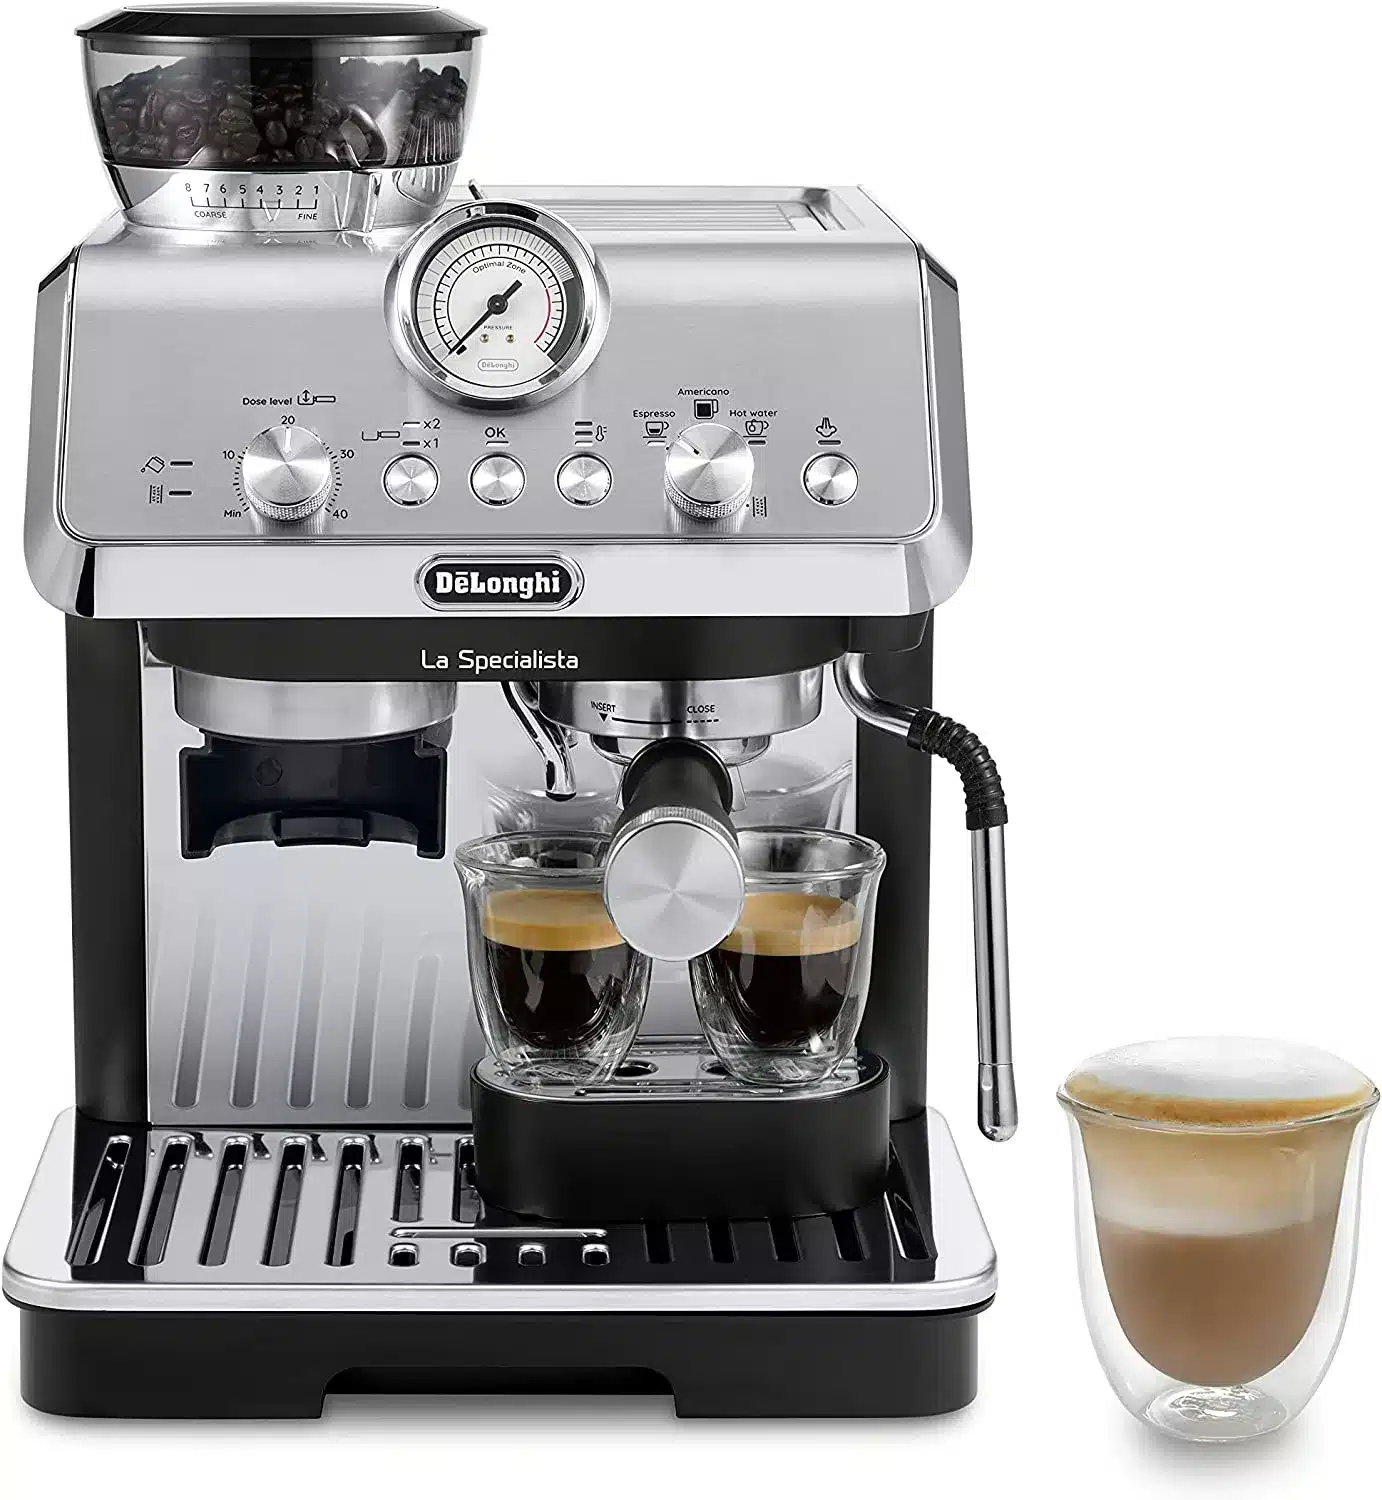 
De’Longhi La Specialista Arte EC9155MB, Espresso Machine with Grinder, Bean to Cup Coffee & Cappuccino Maker with Professional Steamer, My Latte Art...